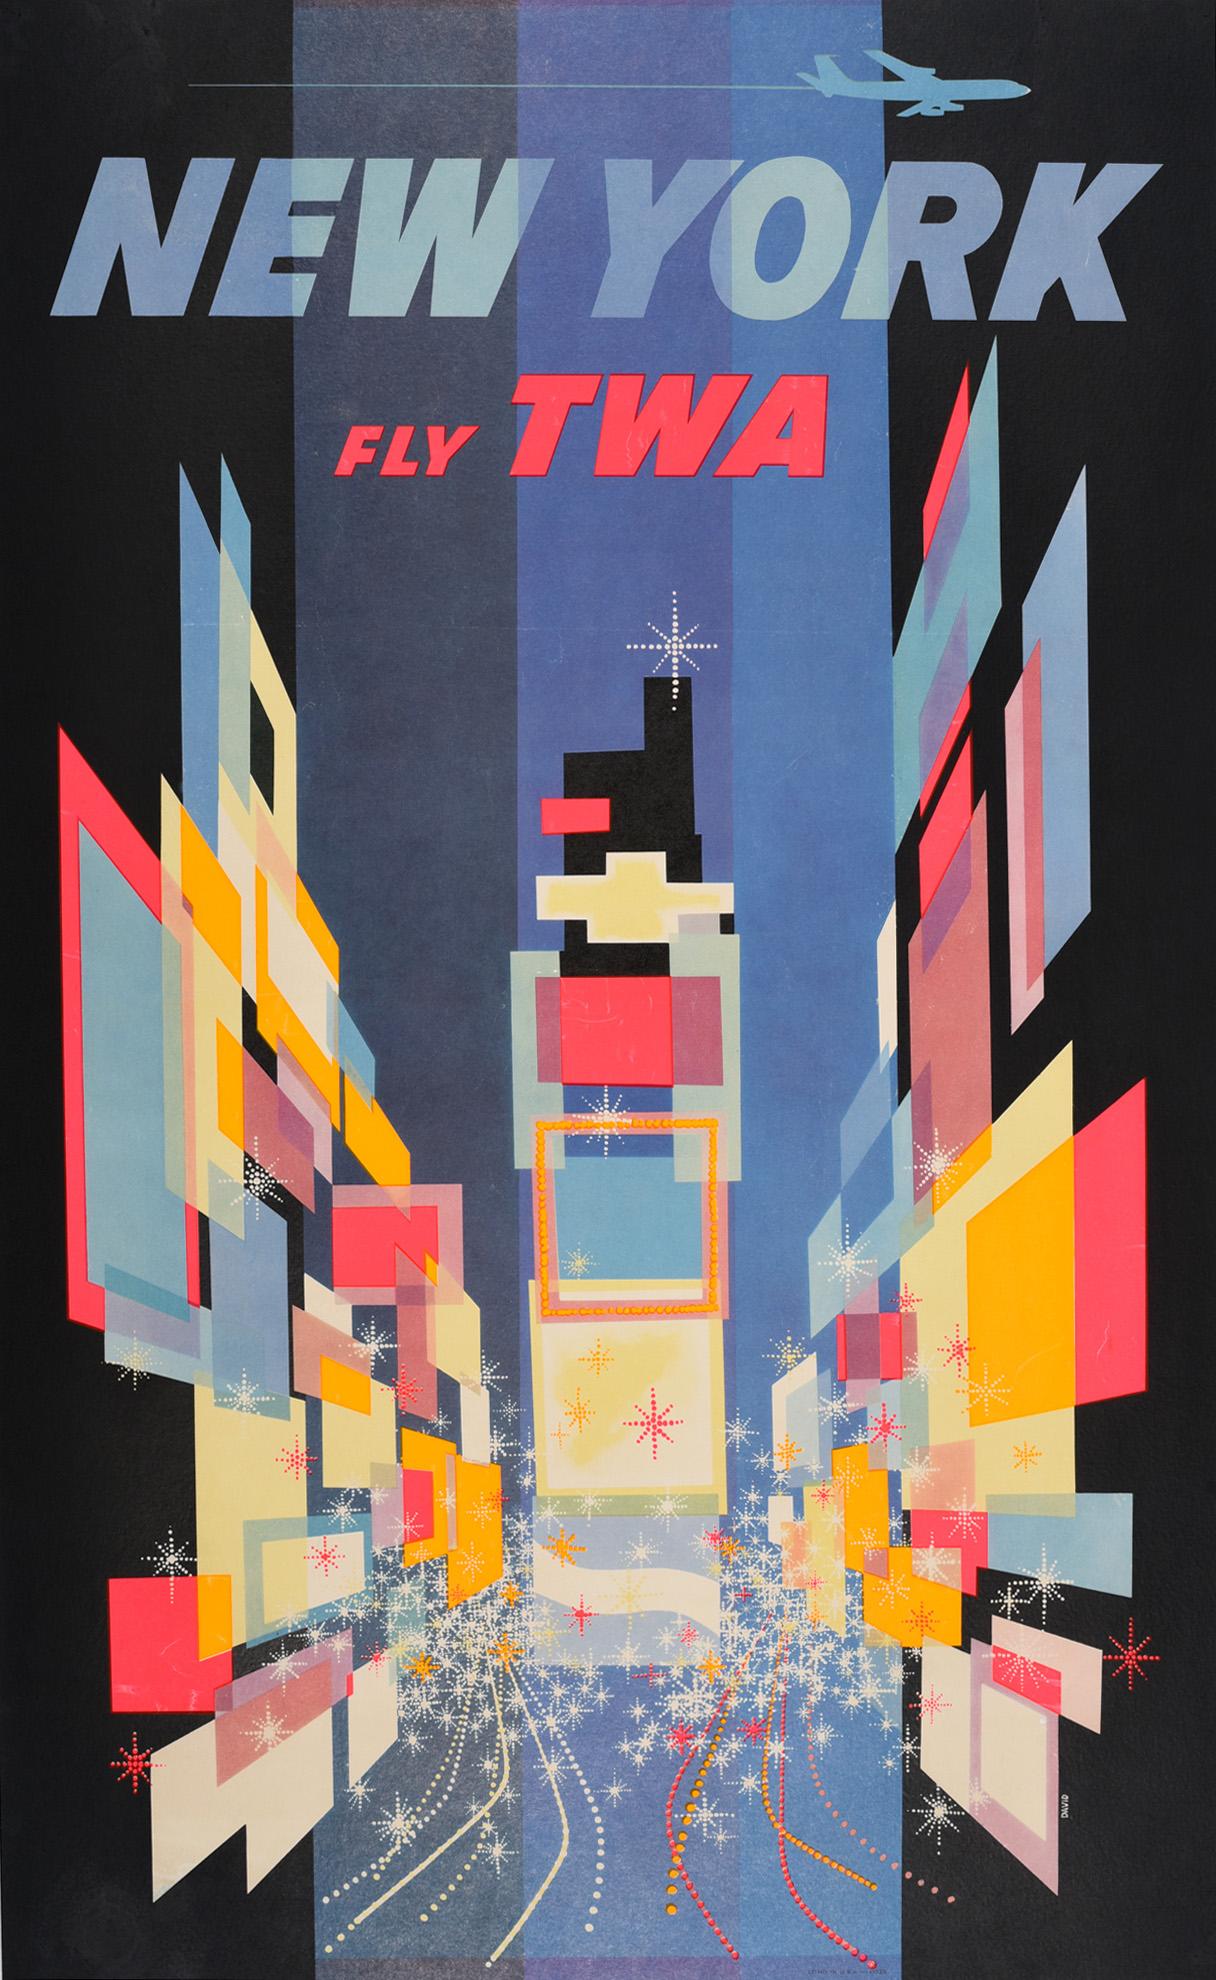 David Klein Print - Original Vintage Poster New York Fly TWA Times Square Jet Plane Abstract Design